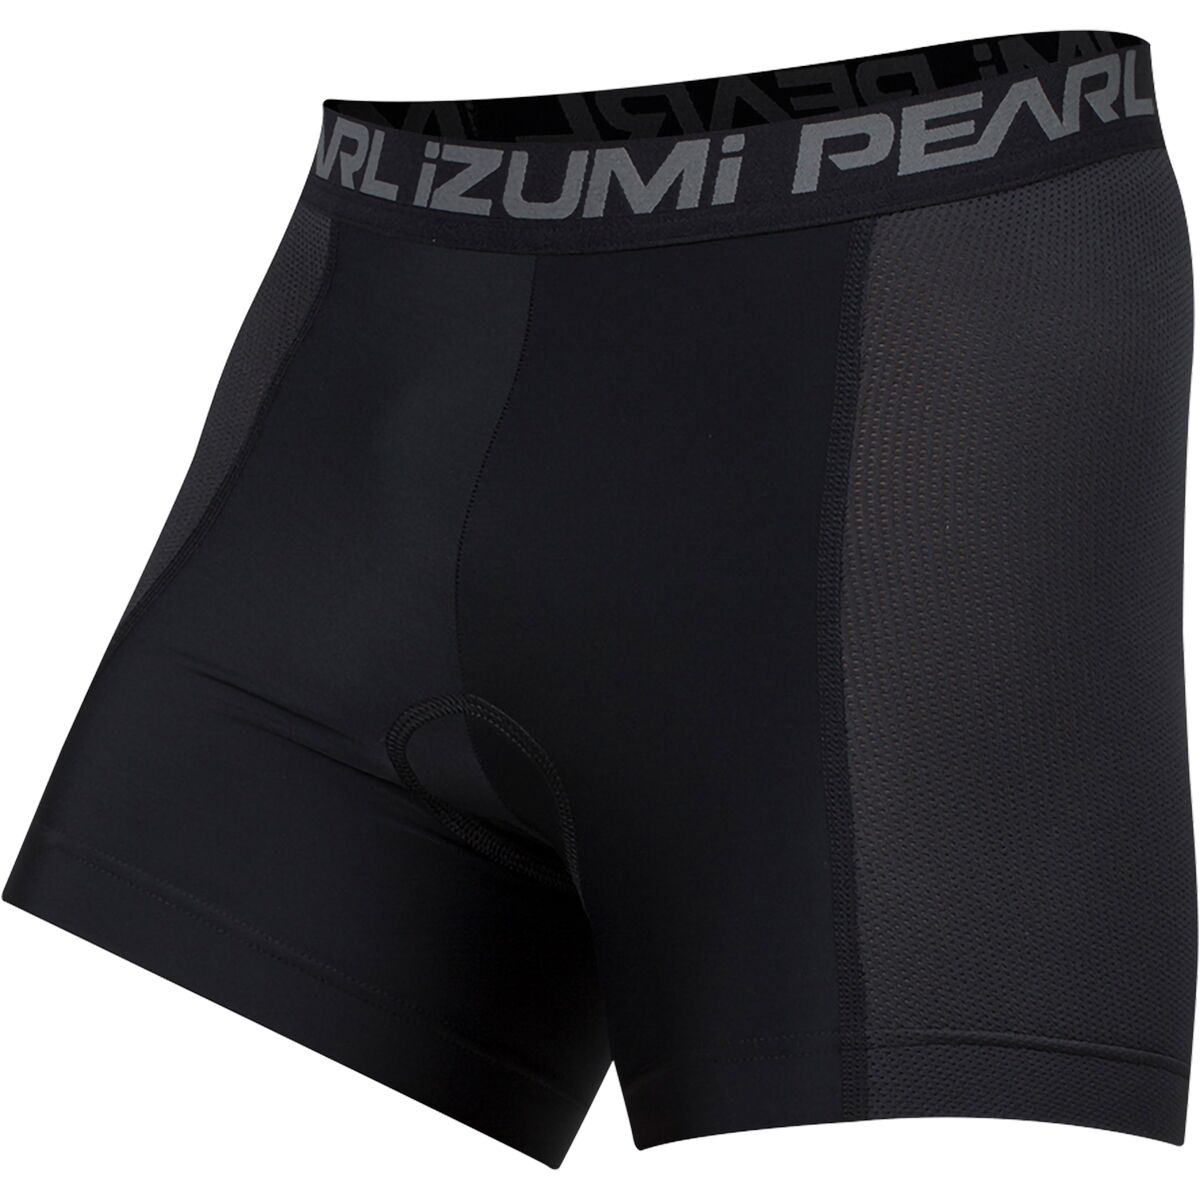 Pearl Izumi Versa Liner - Men's